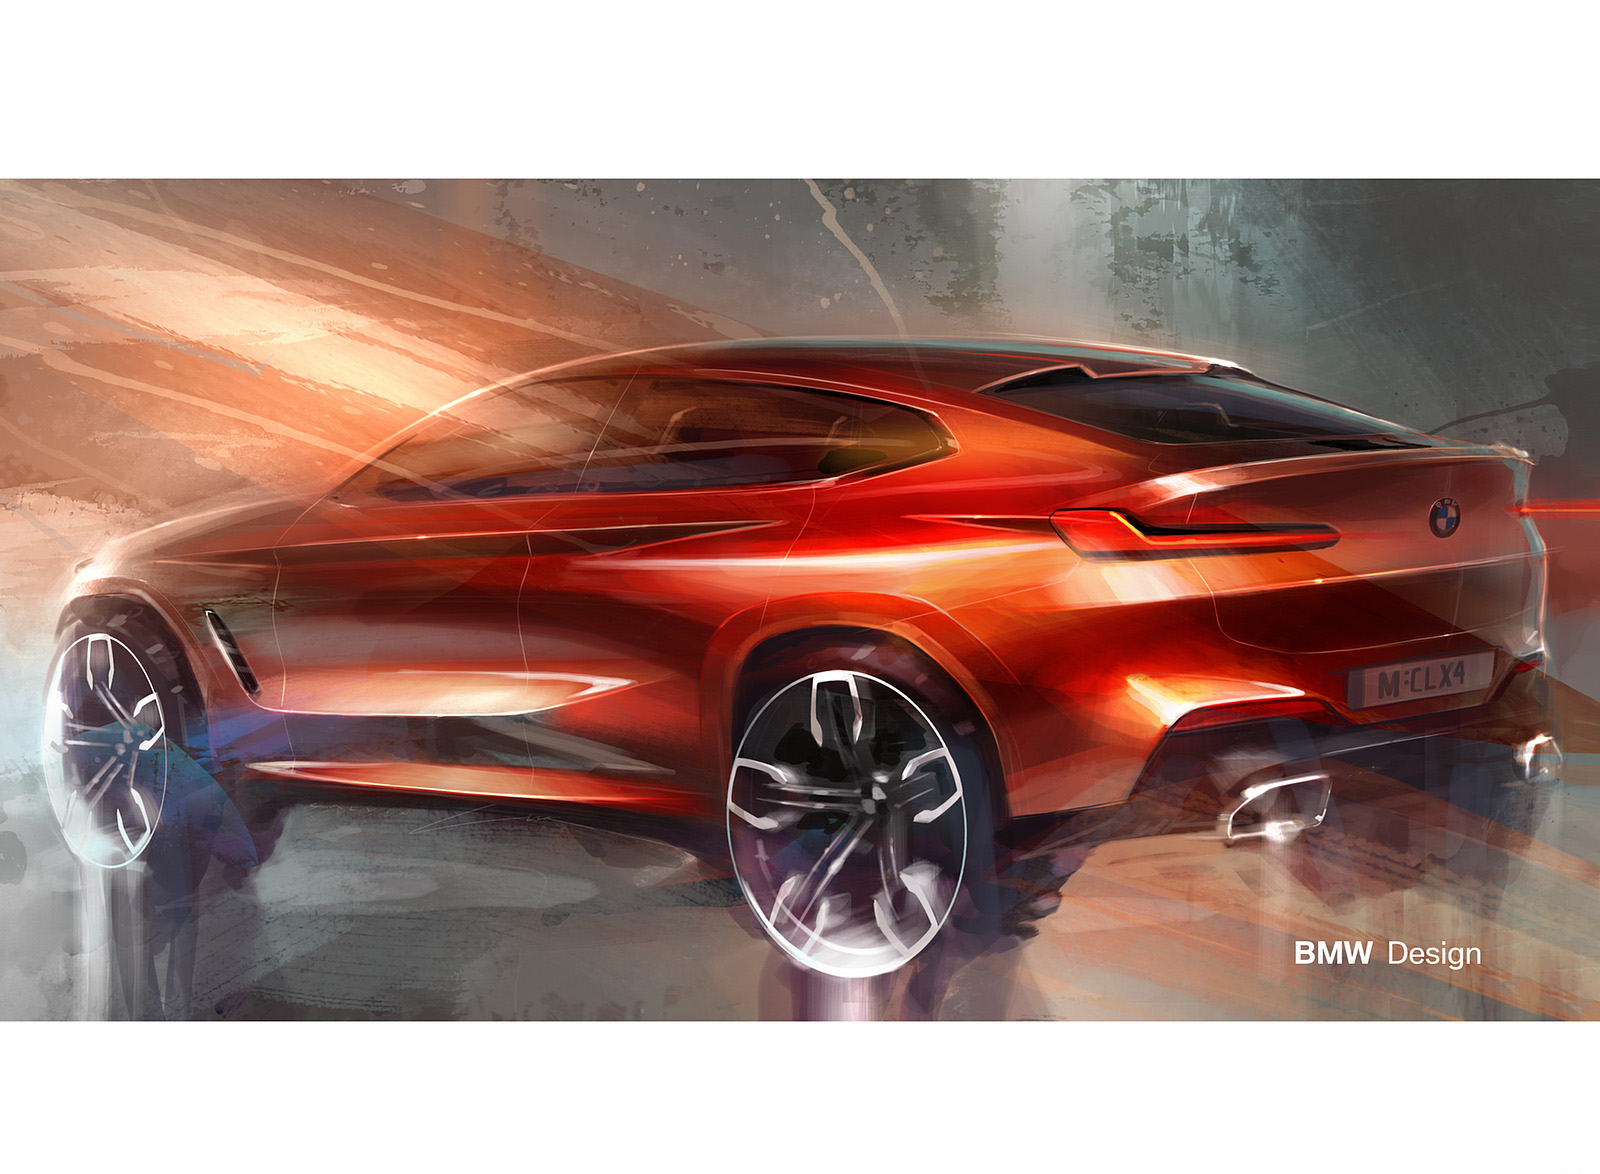 2019 BMW X4 M40d Design Sketch Wallpapers #193 of 202